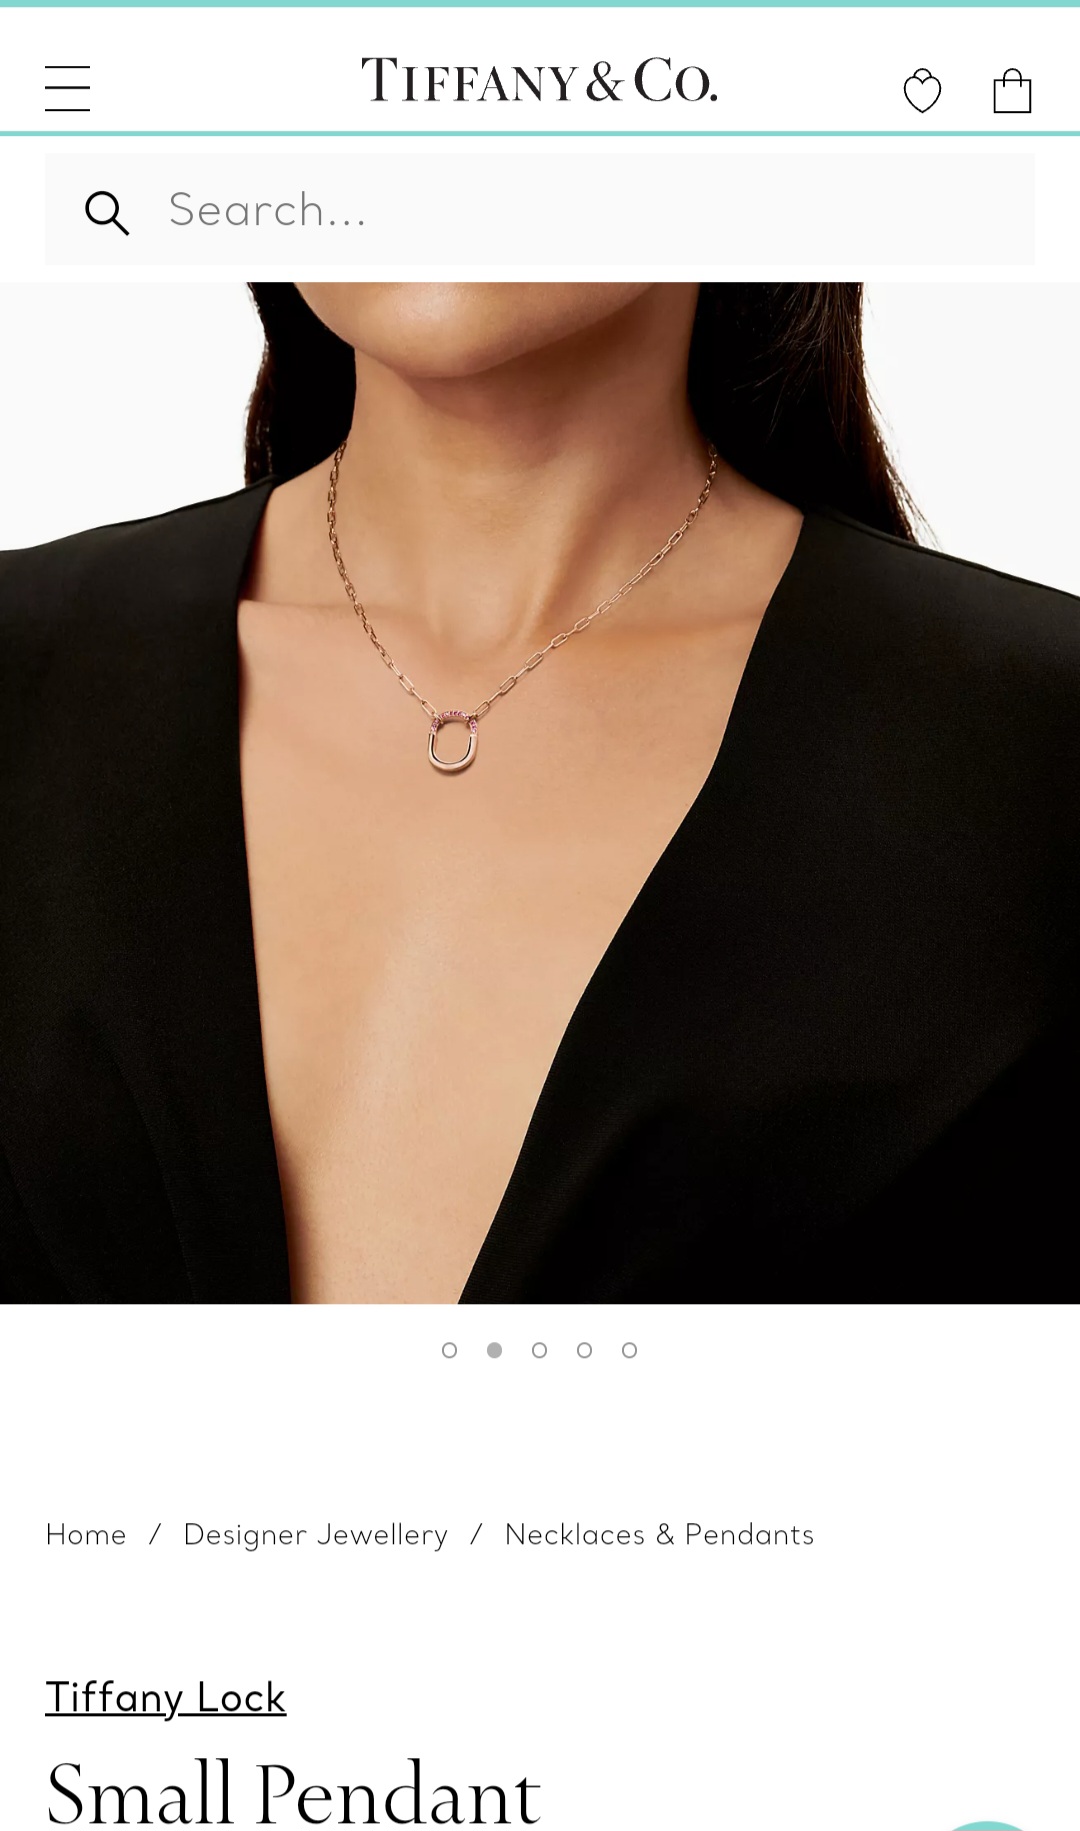 Tiffany & co Lock Small Pendant necklace